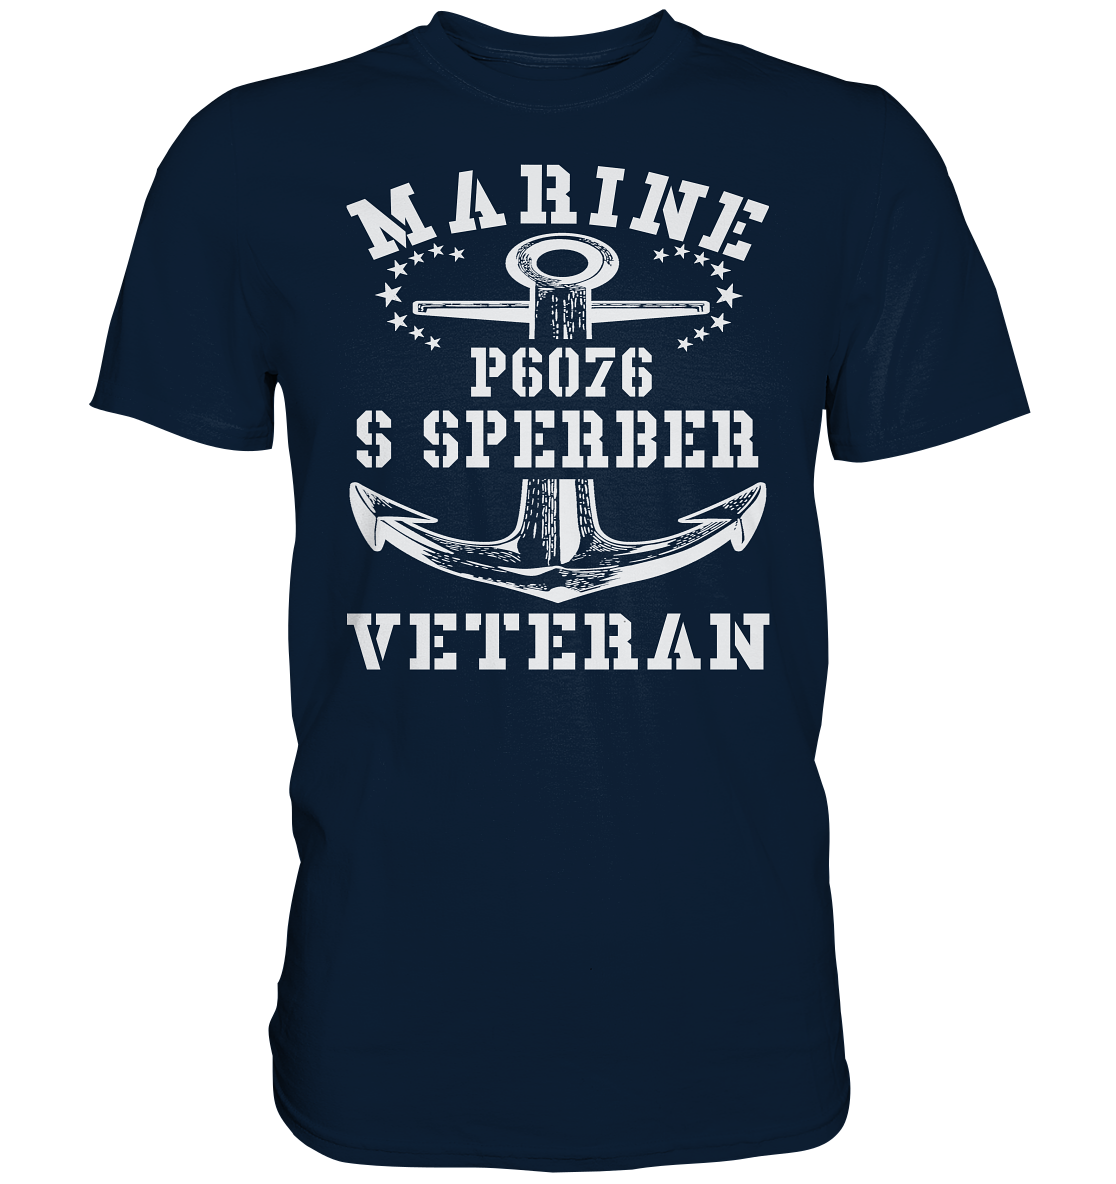 P6076 S SPERBER Marine Veteran - Premium Shirt